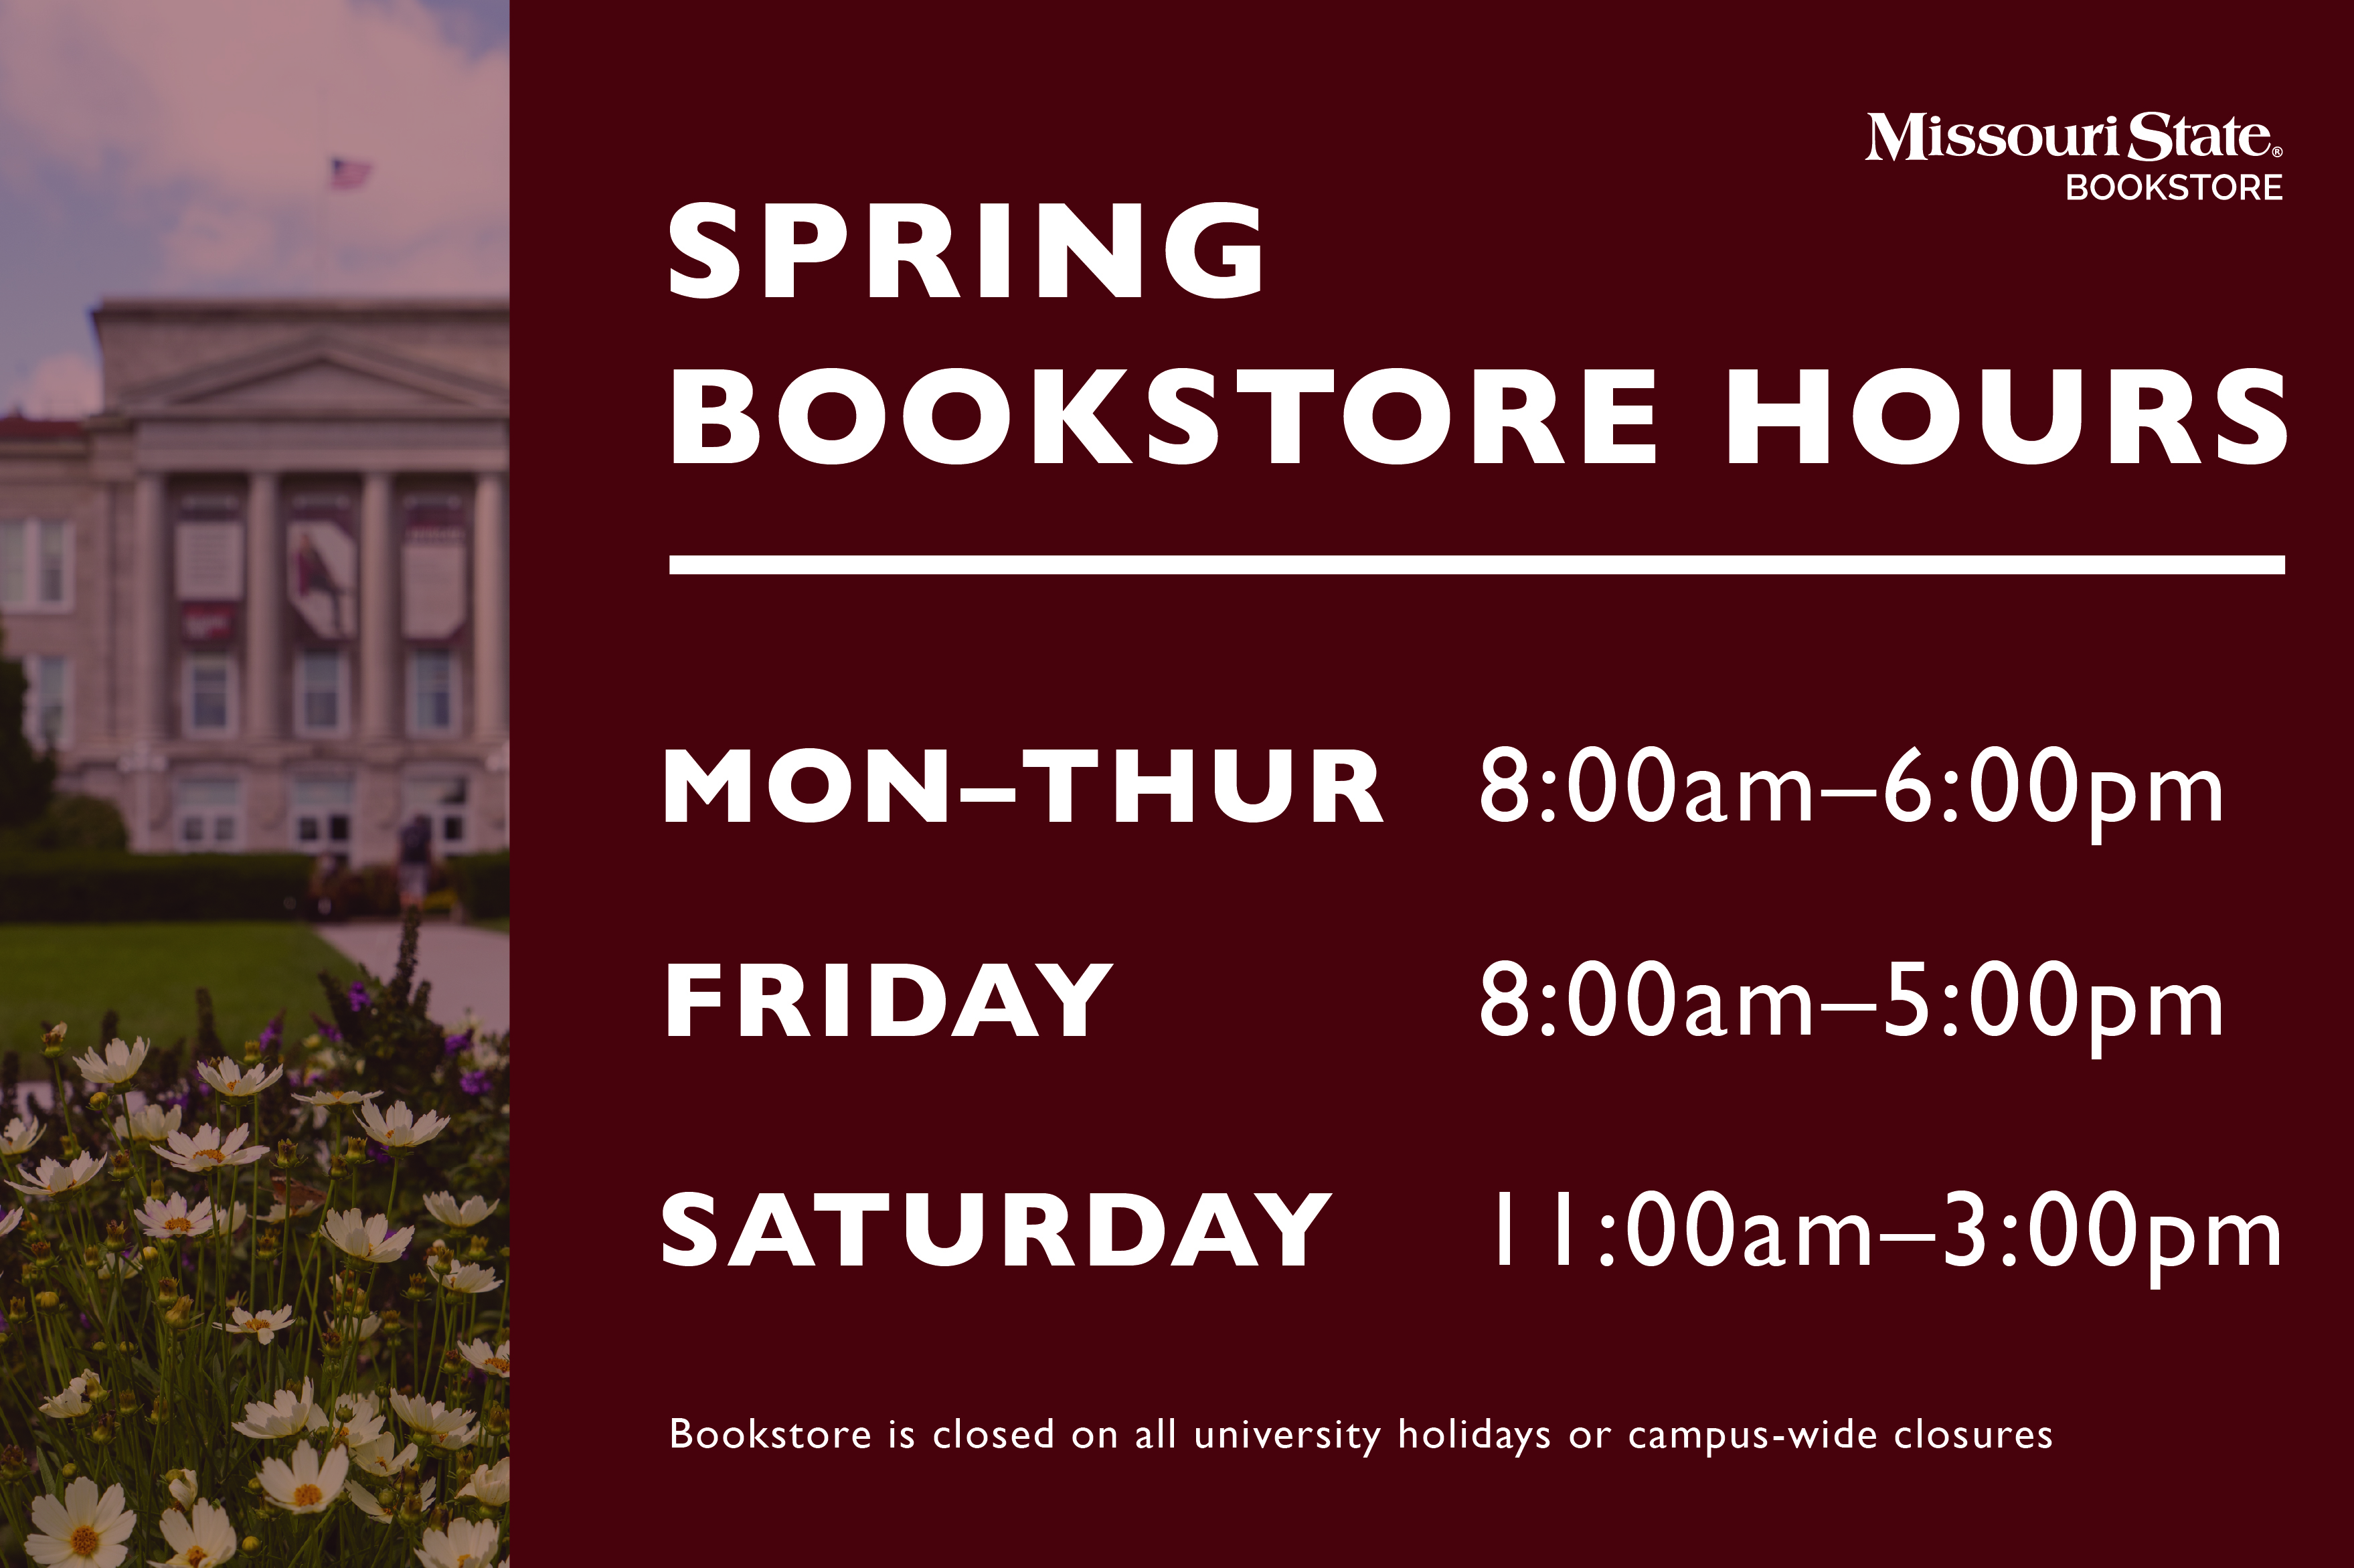 Missouri State Bookstore January Hours.  1st-3rd: Closed.  4th-5th: 8am to 5pm.  6th-7th: Closed.  8th-11th: 8am to 6pm.  12th: 8am to 5pm.  13th-14th: 12pm to 6pm.  15th: 10am to 5pm.  16th: Resume regular Bookstore Hours.